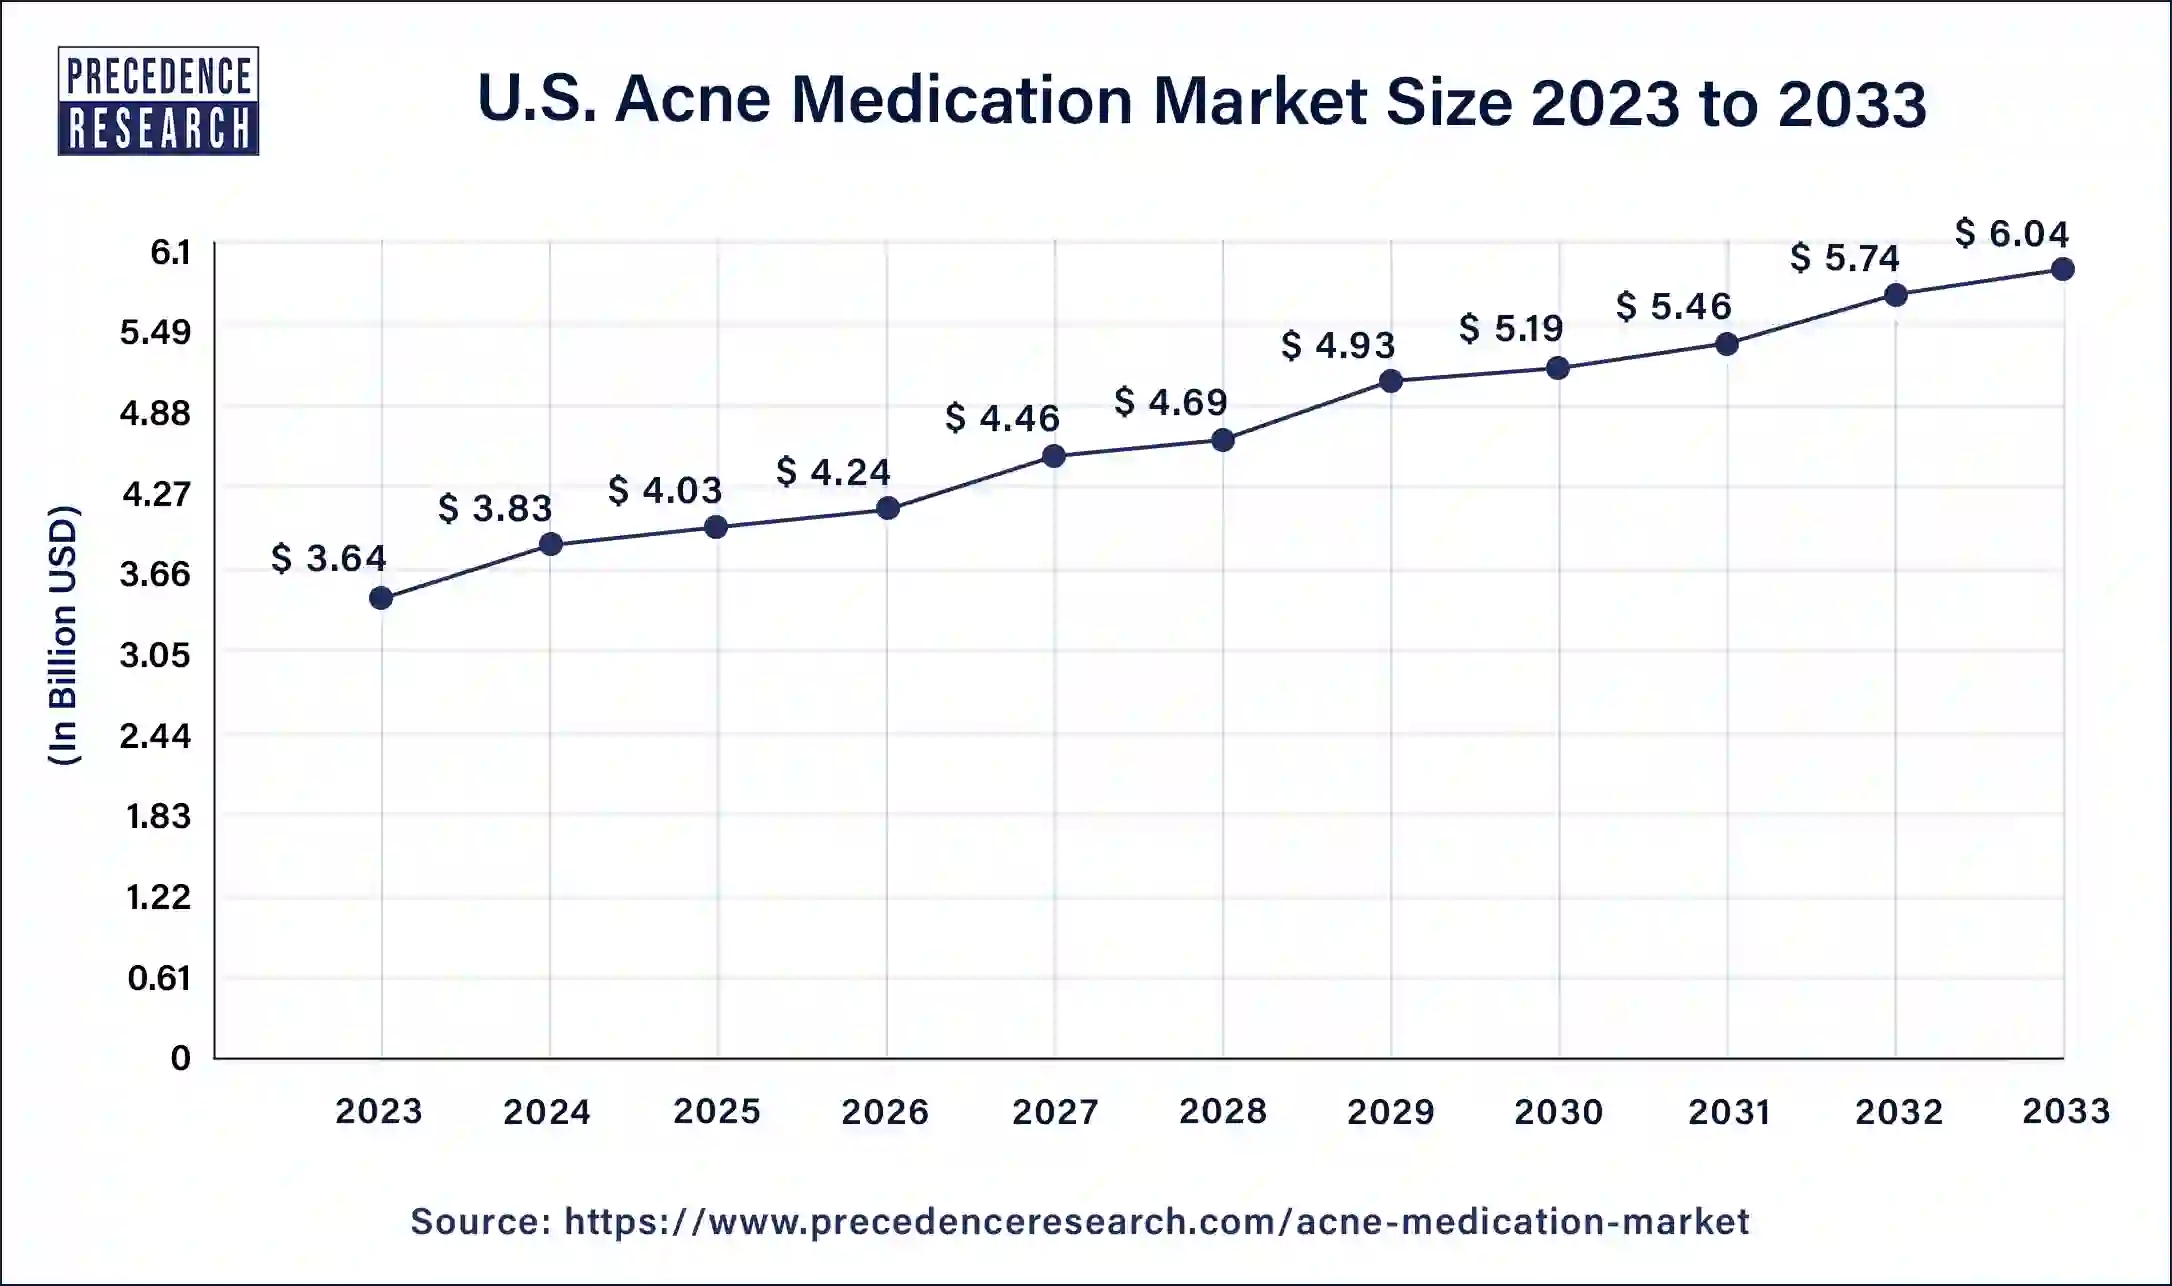 U.S. Acne Medication Market Size 2024 to 2033